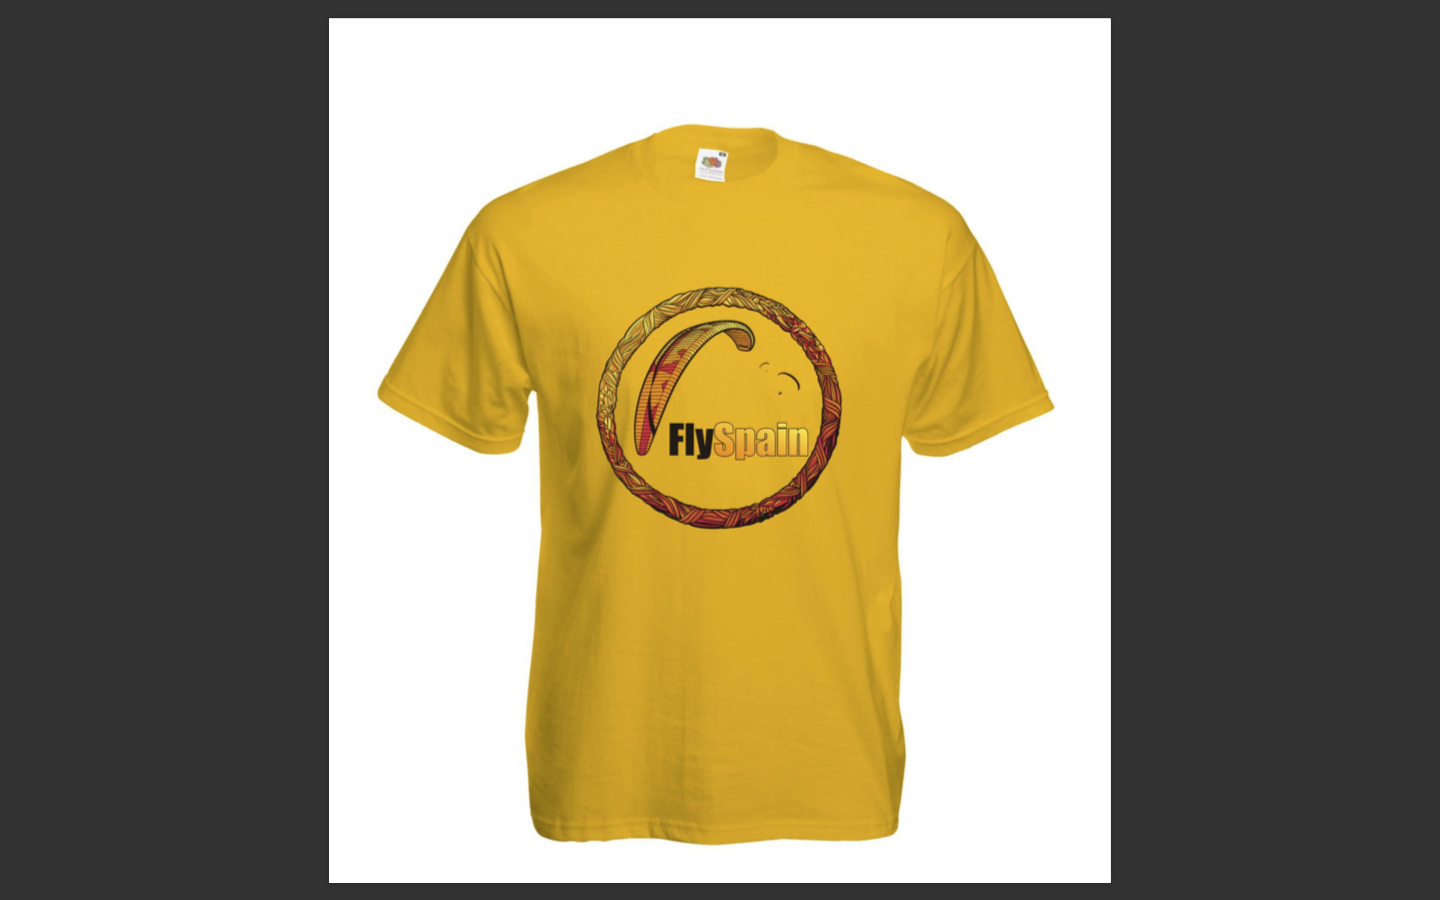 FlySpain Tee shirts